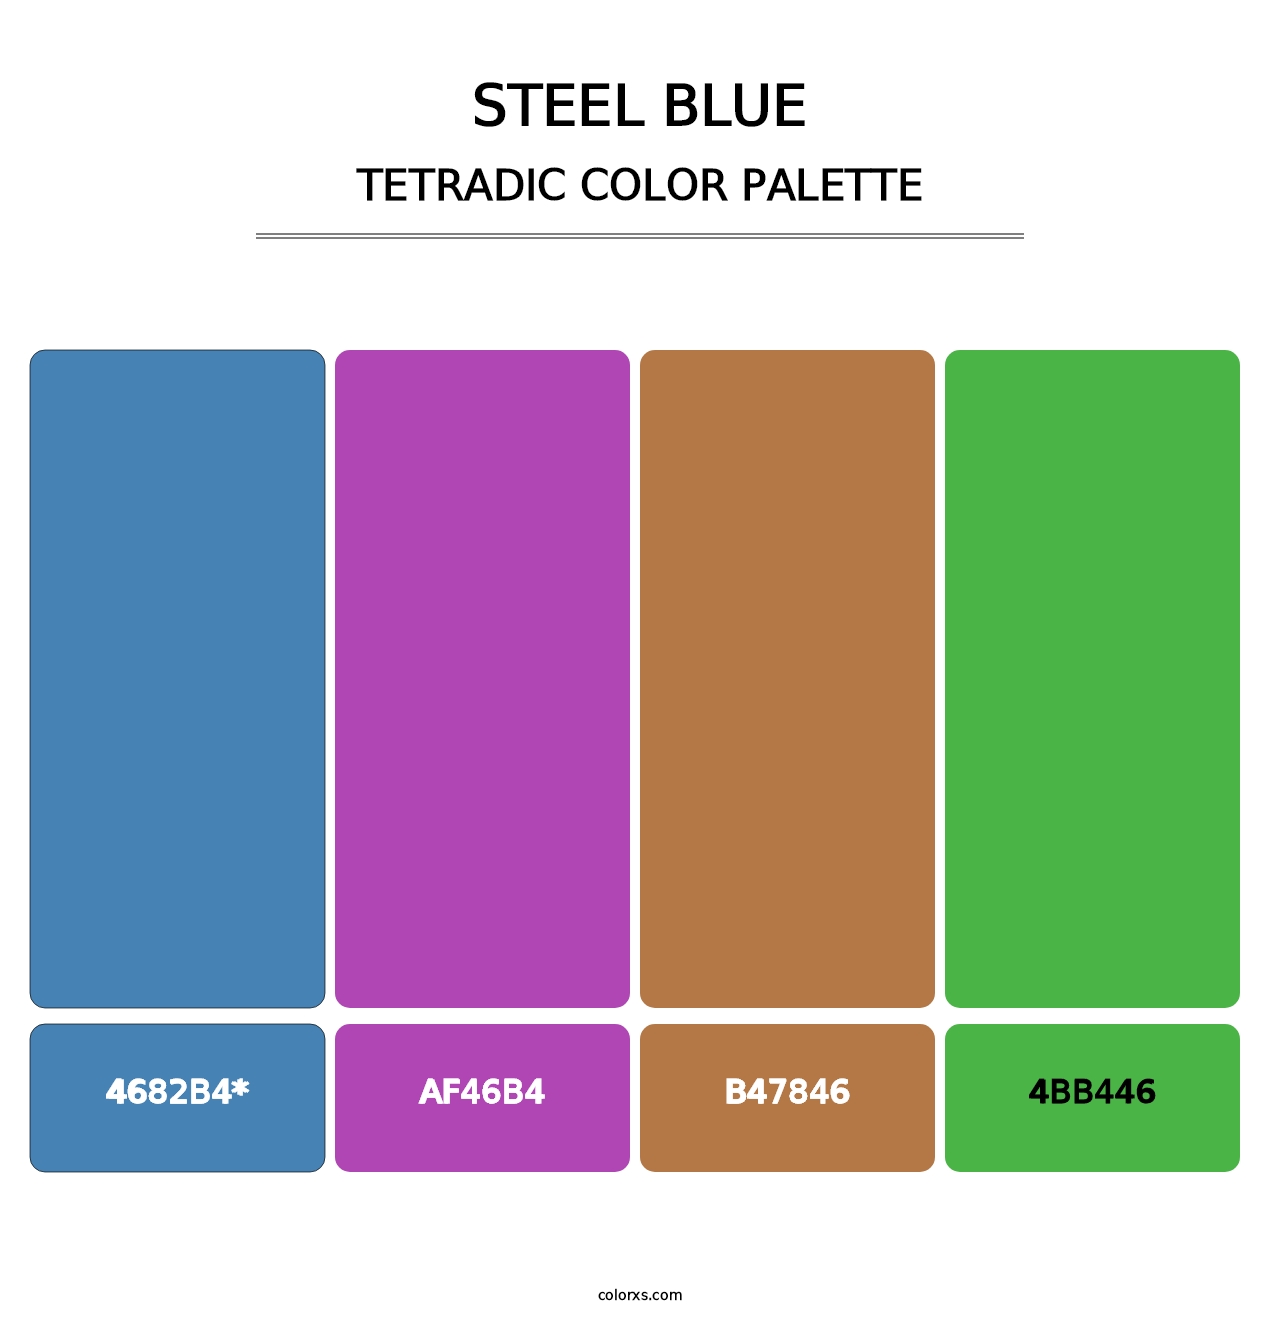 Steel Blue - Tetradic Color Palette